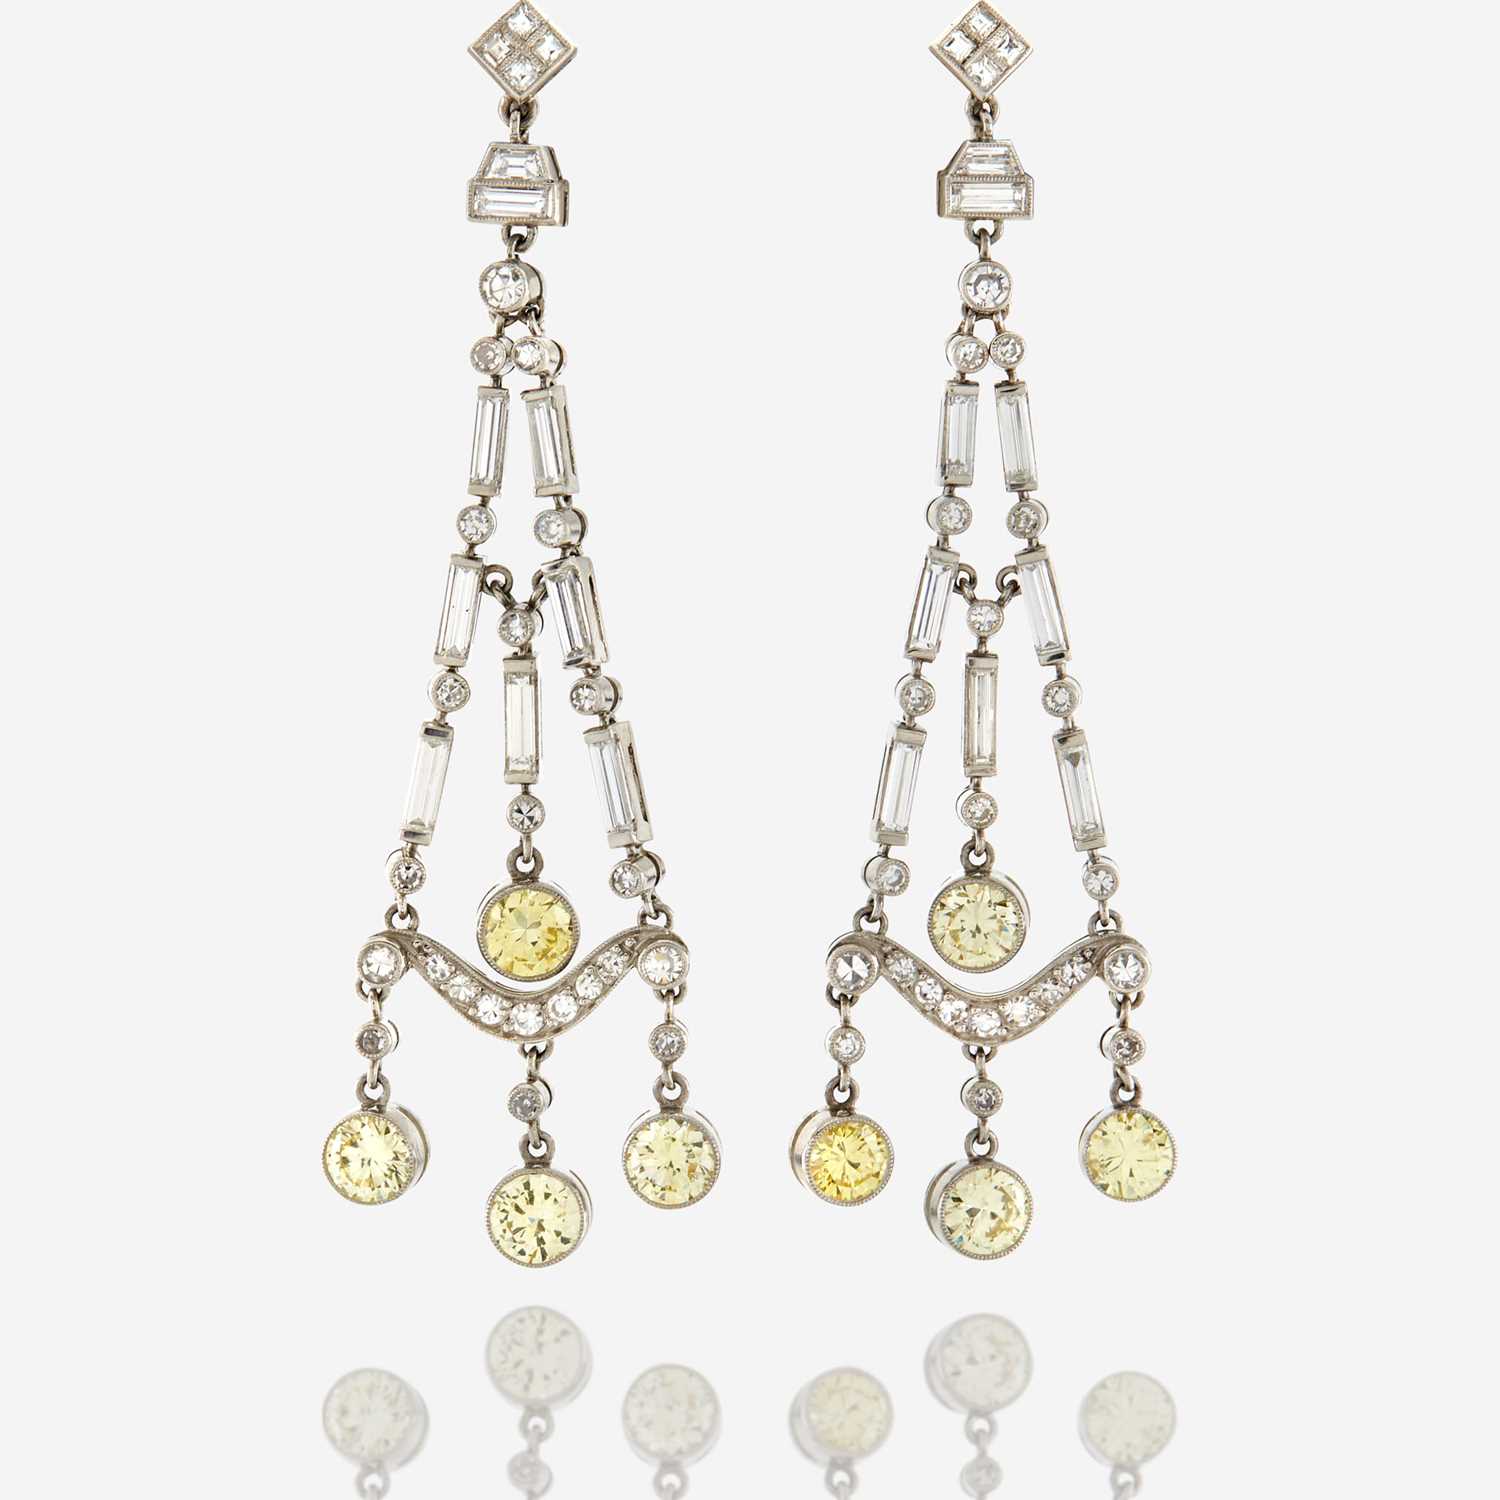 Lot 27 - A pair of diamond, colored diamond, and platinum pendant earrings